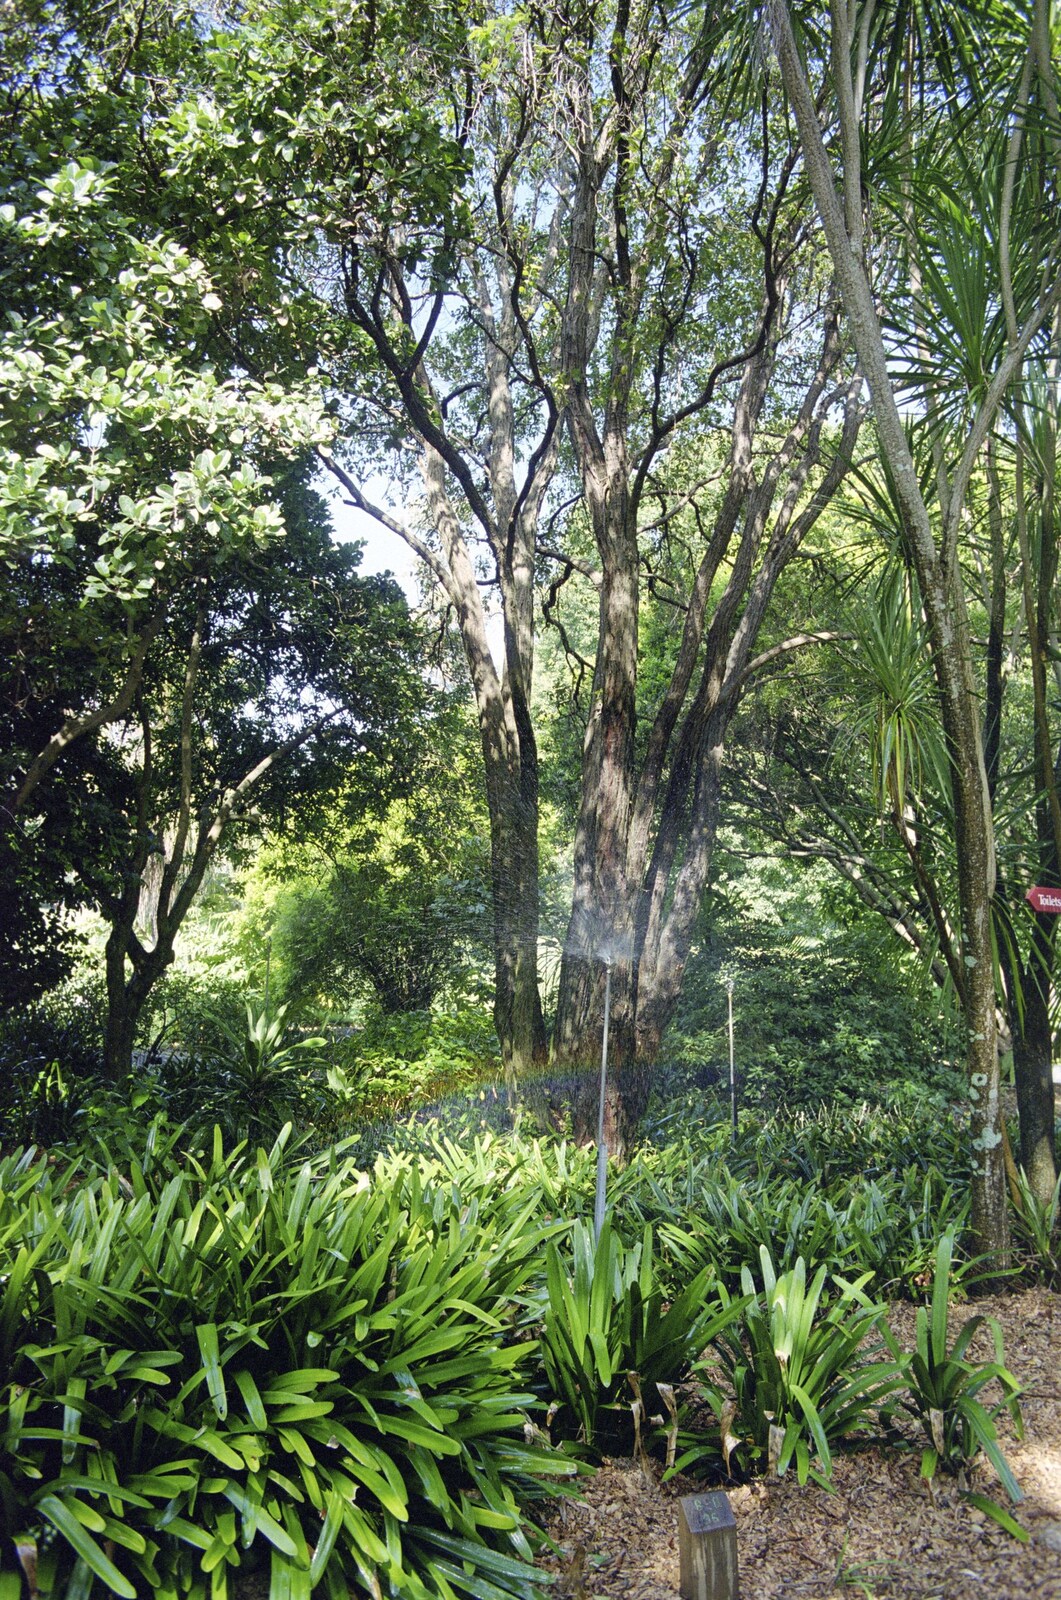 Trees in the botanical gardens from Sydney Triathlon, Sydney, Australia - 16th April 2000